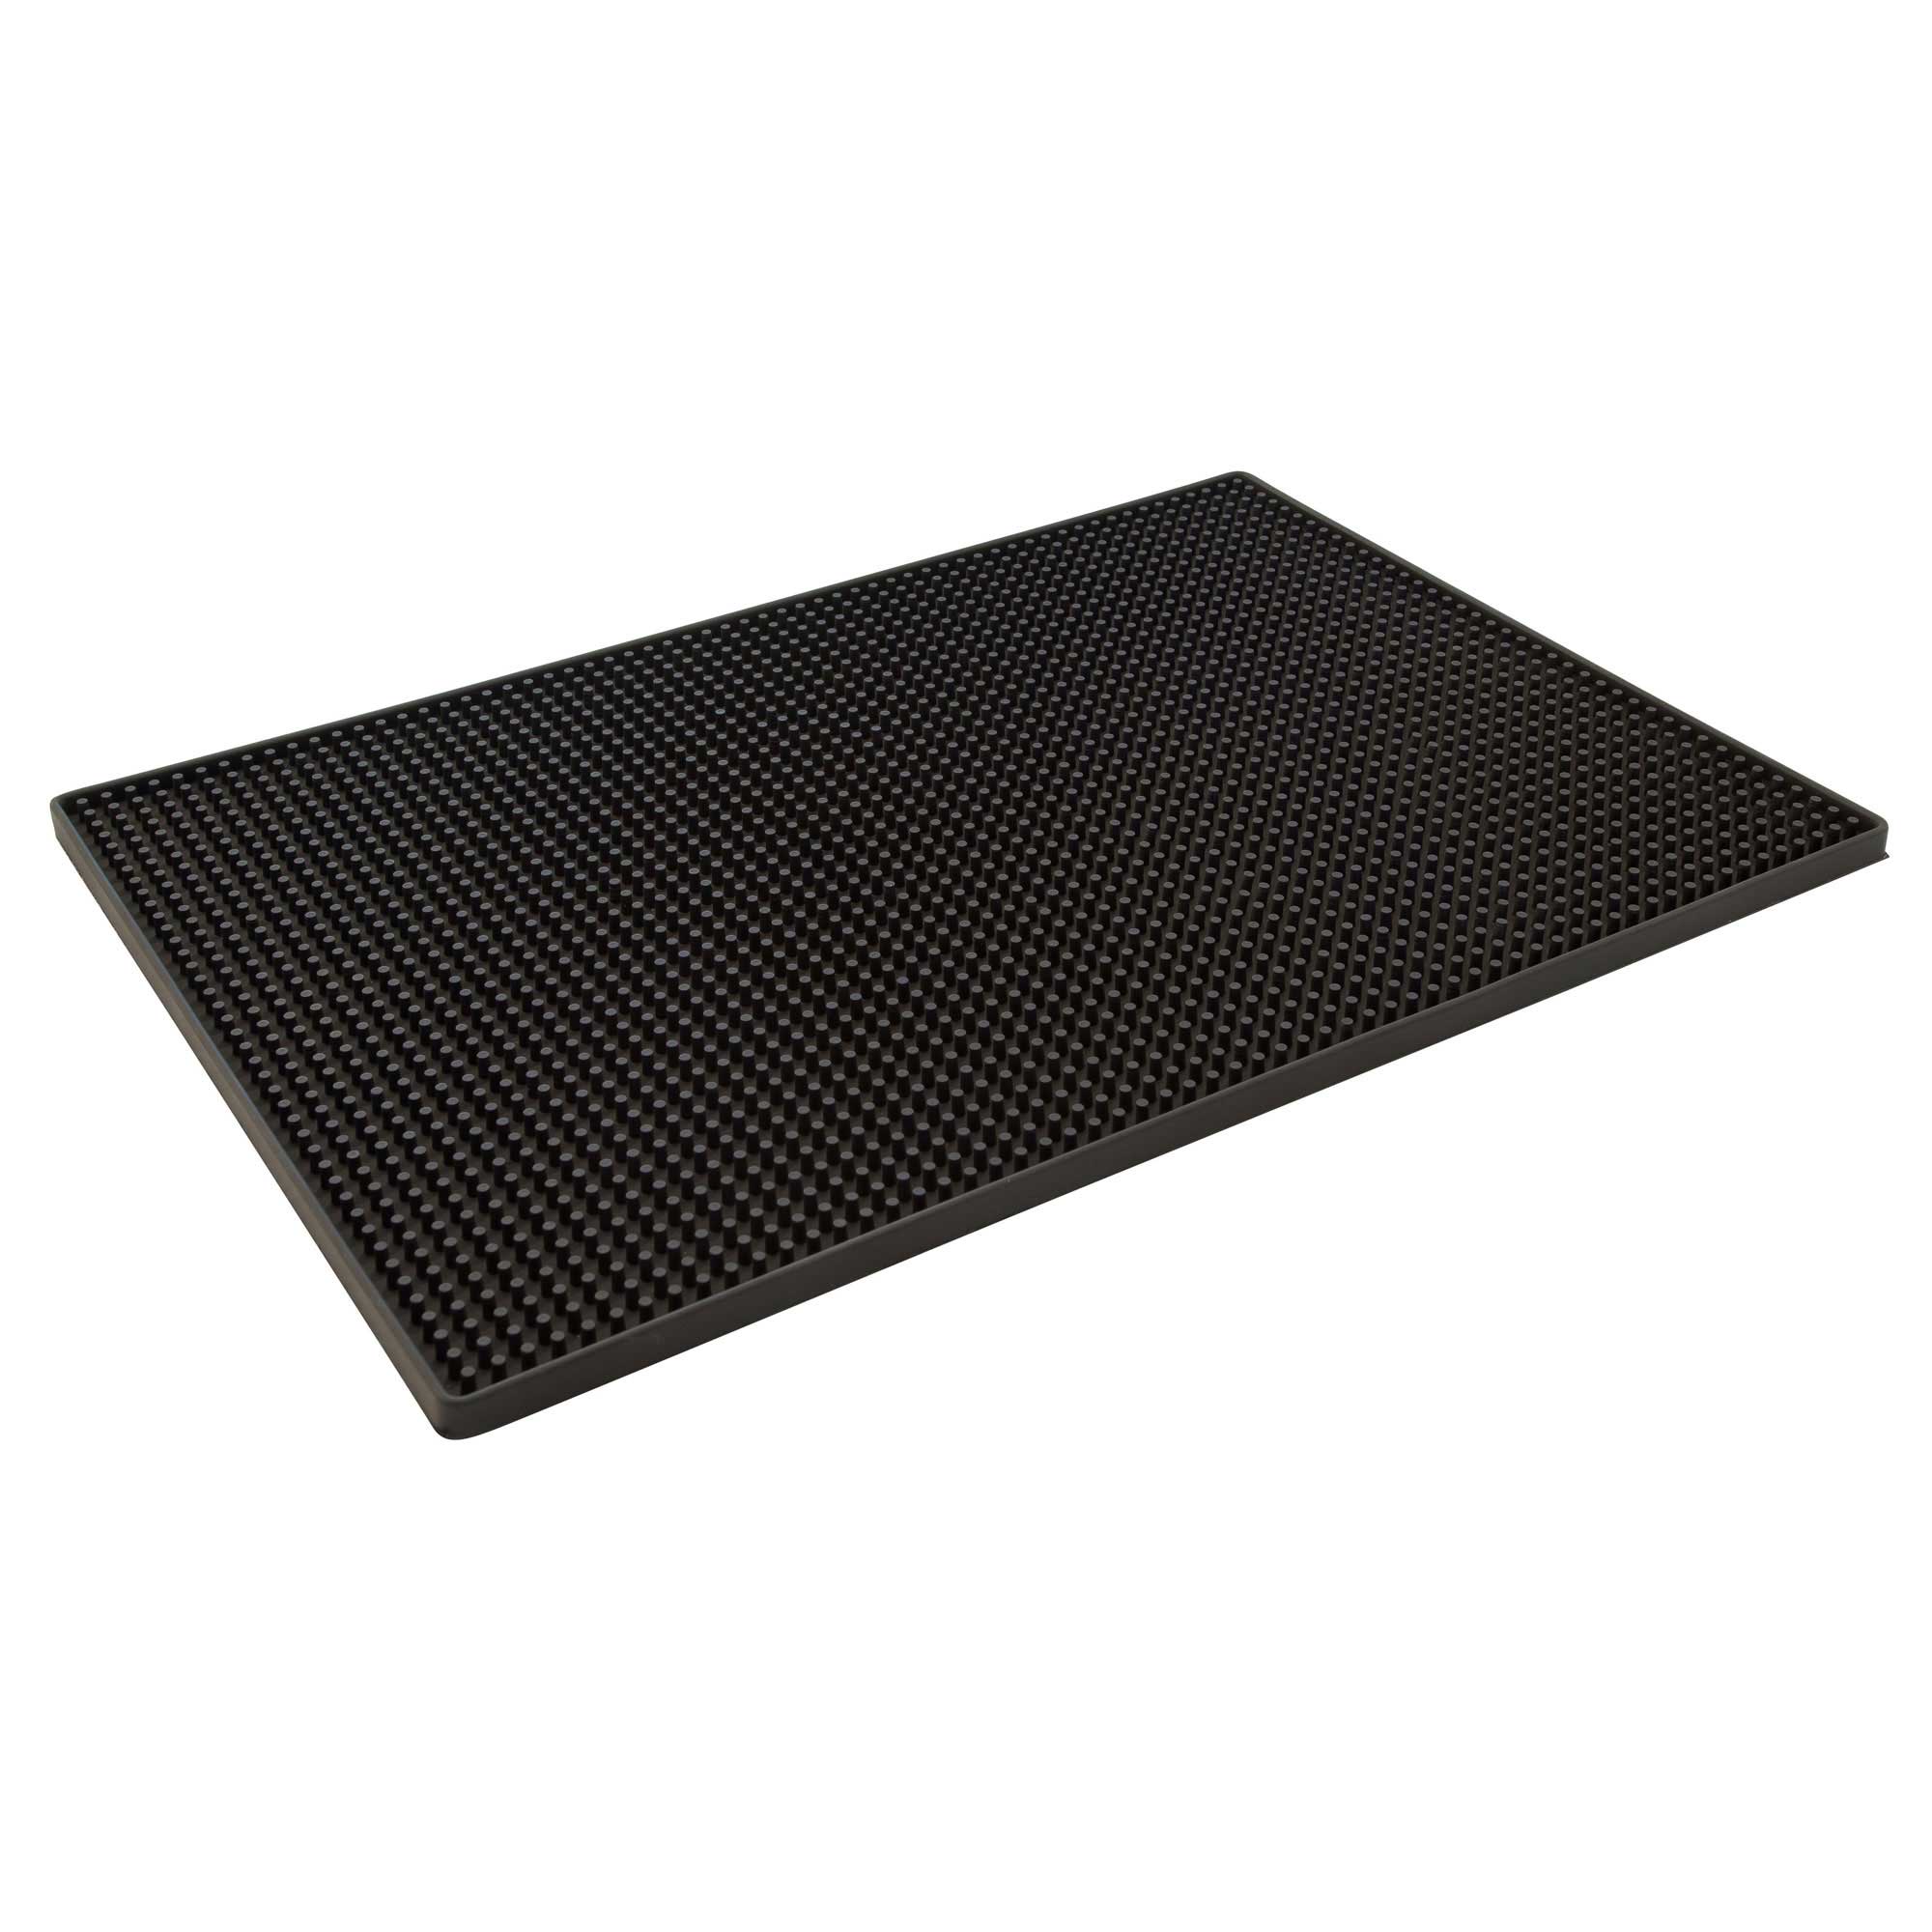 W517961 Barmat zwart rubber 45x30cm